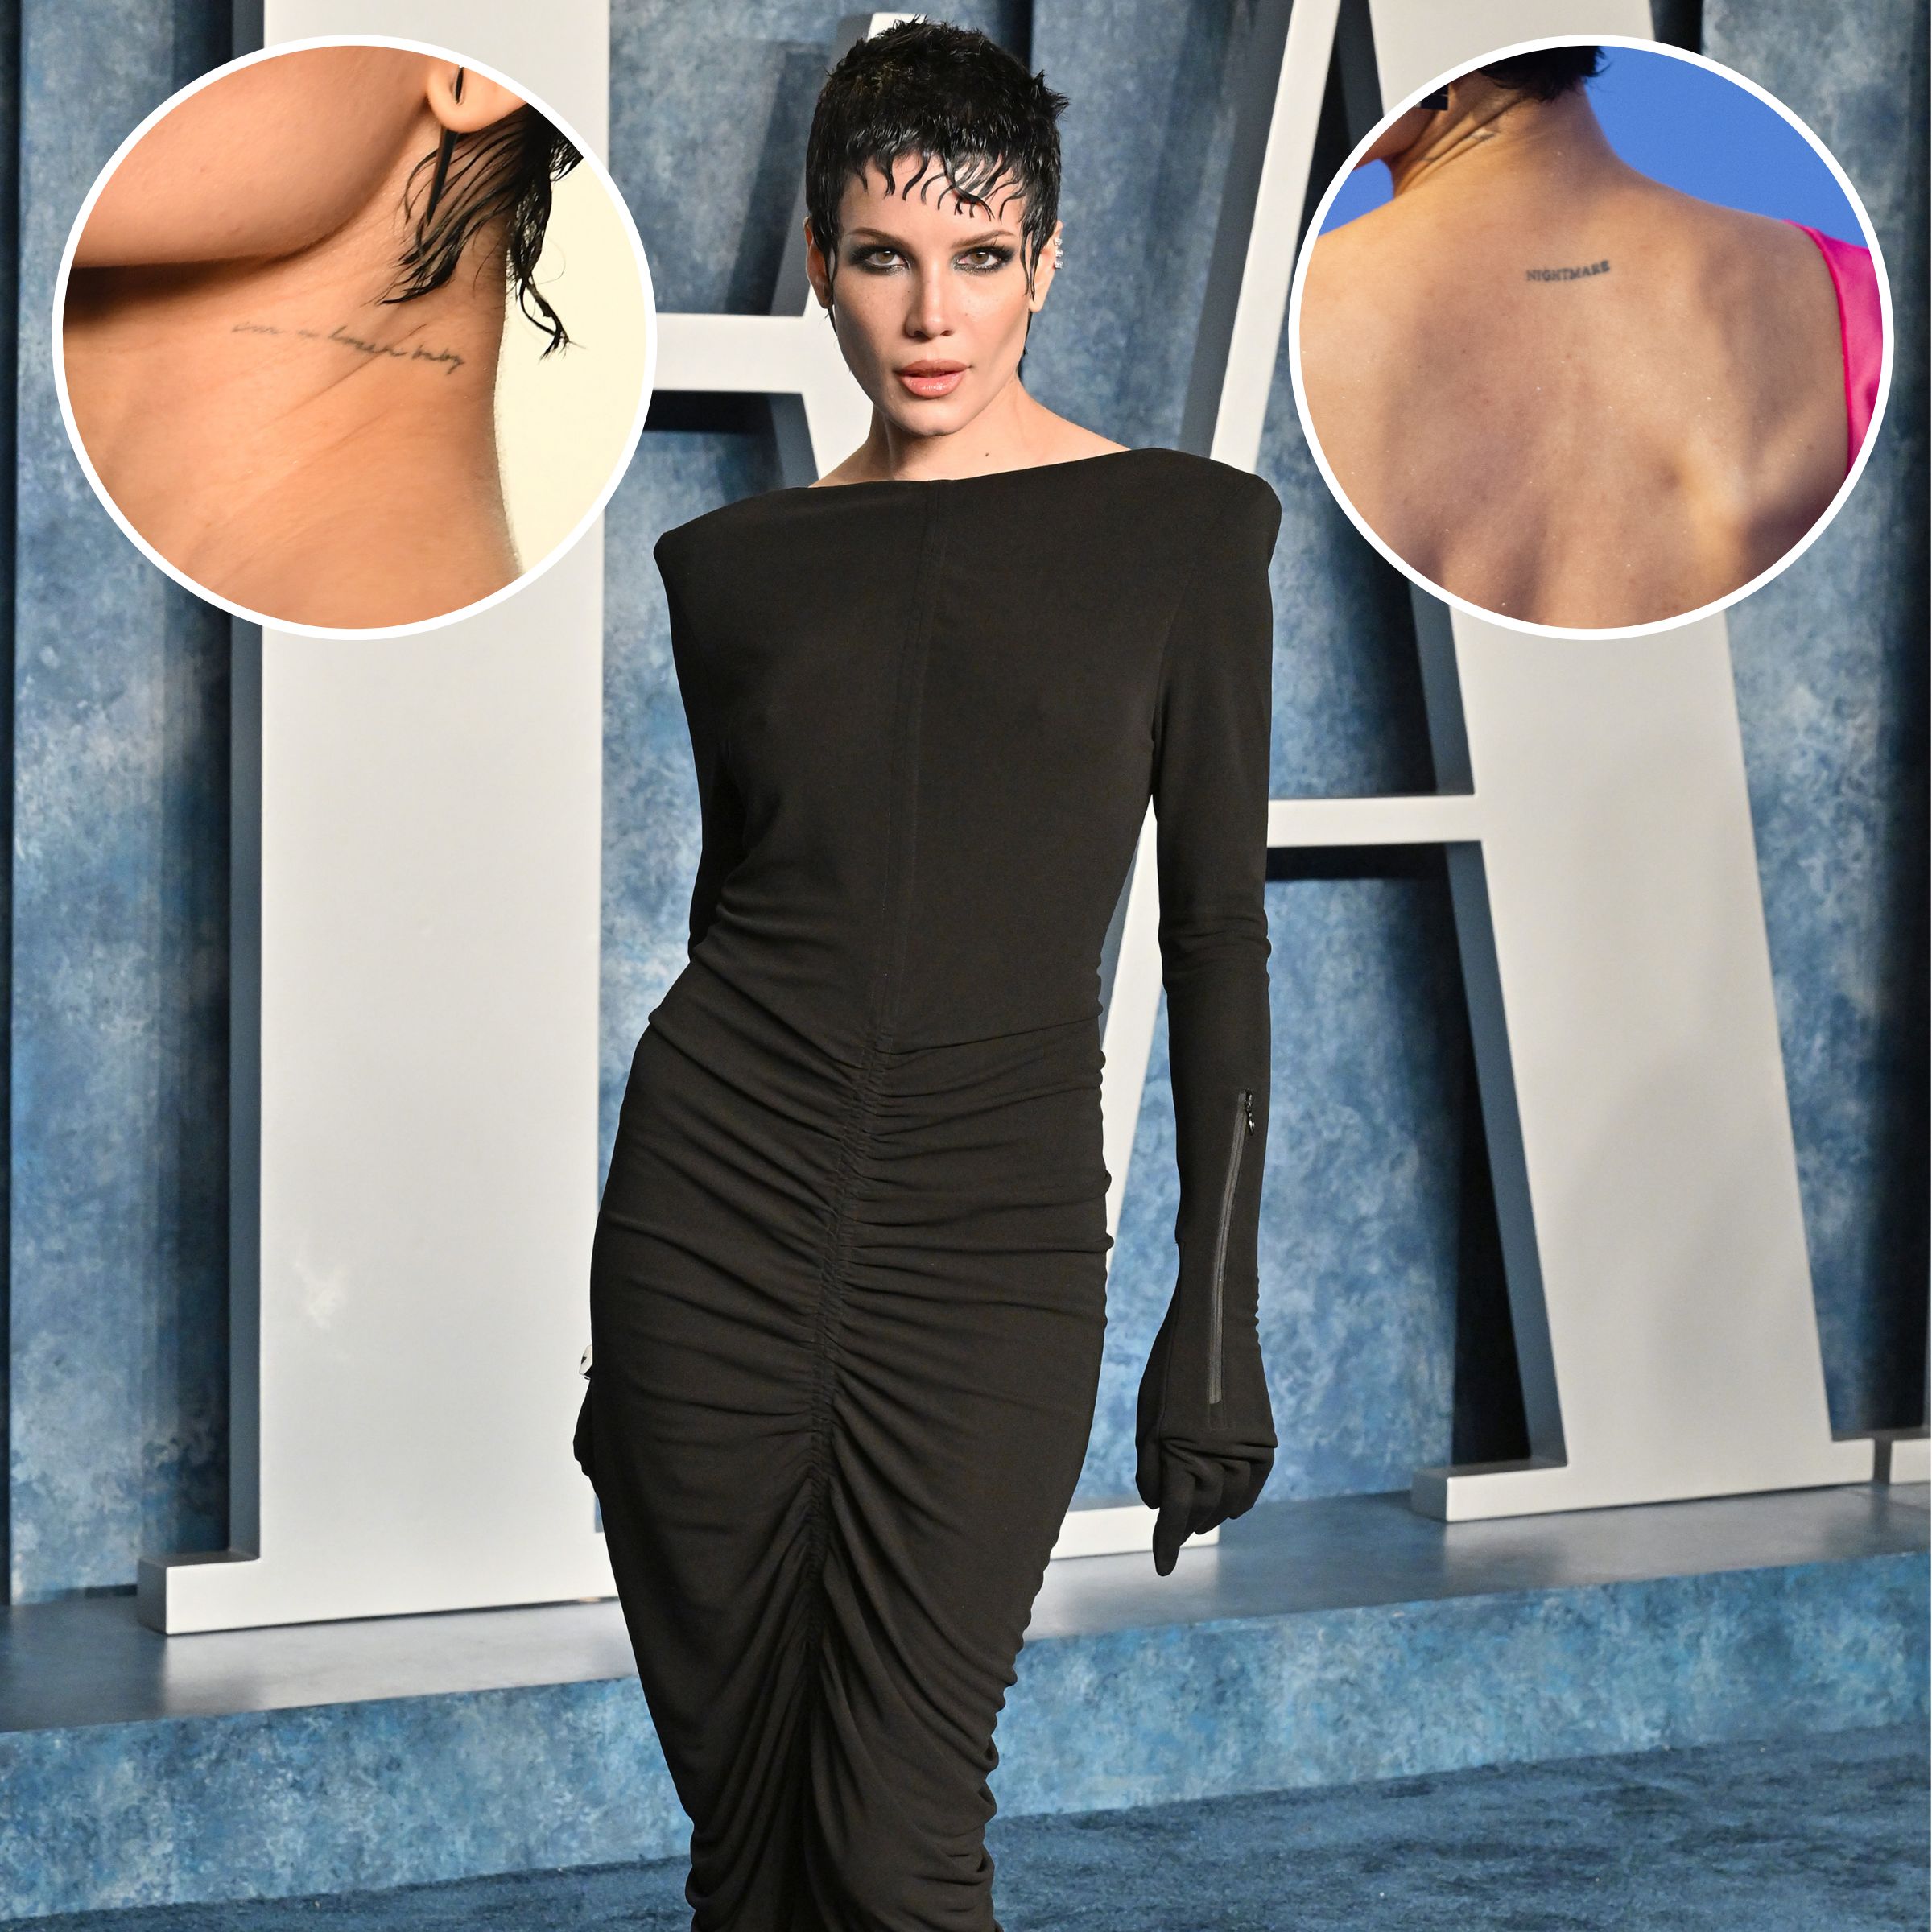 HD wallpaper: woman with tattoo and wearing black dress, Halsey, Ashley  Frangipane | Wallpaper Flare